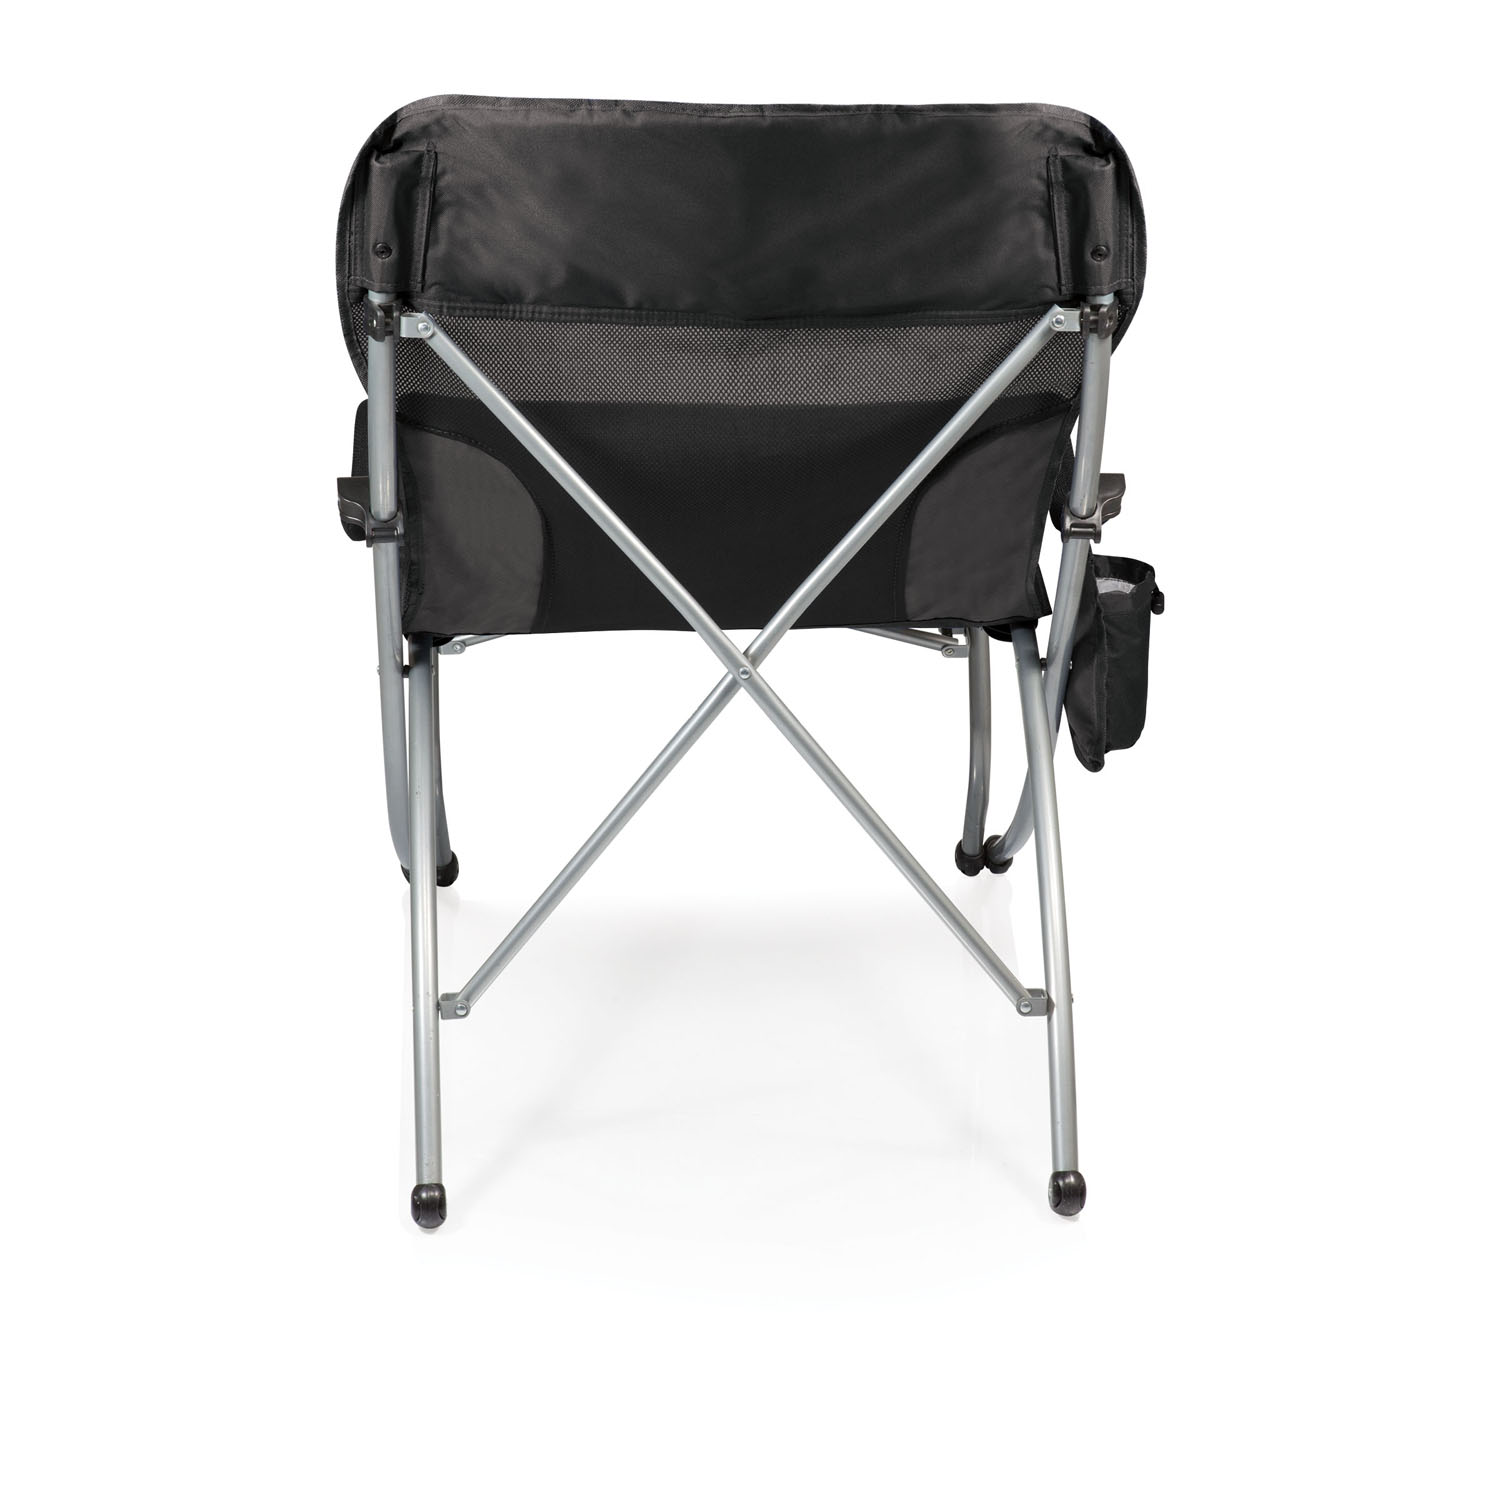 Picnic Time PT-XL Portable Folding Camp Chair - Black - image 5 of 5